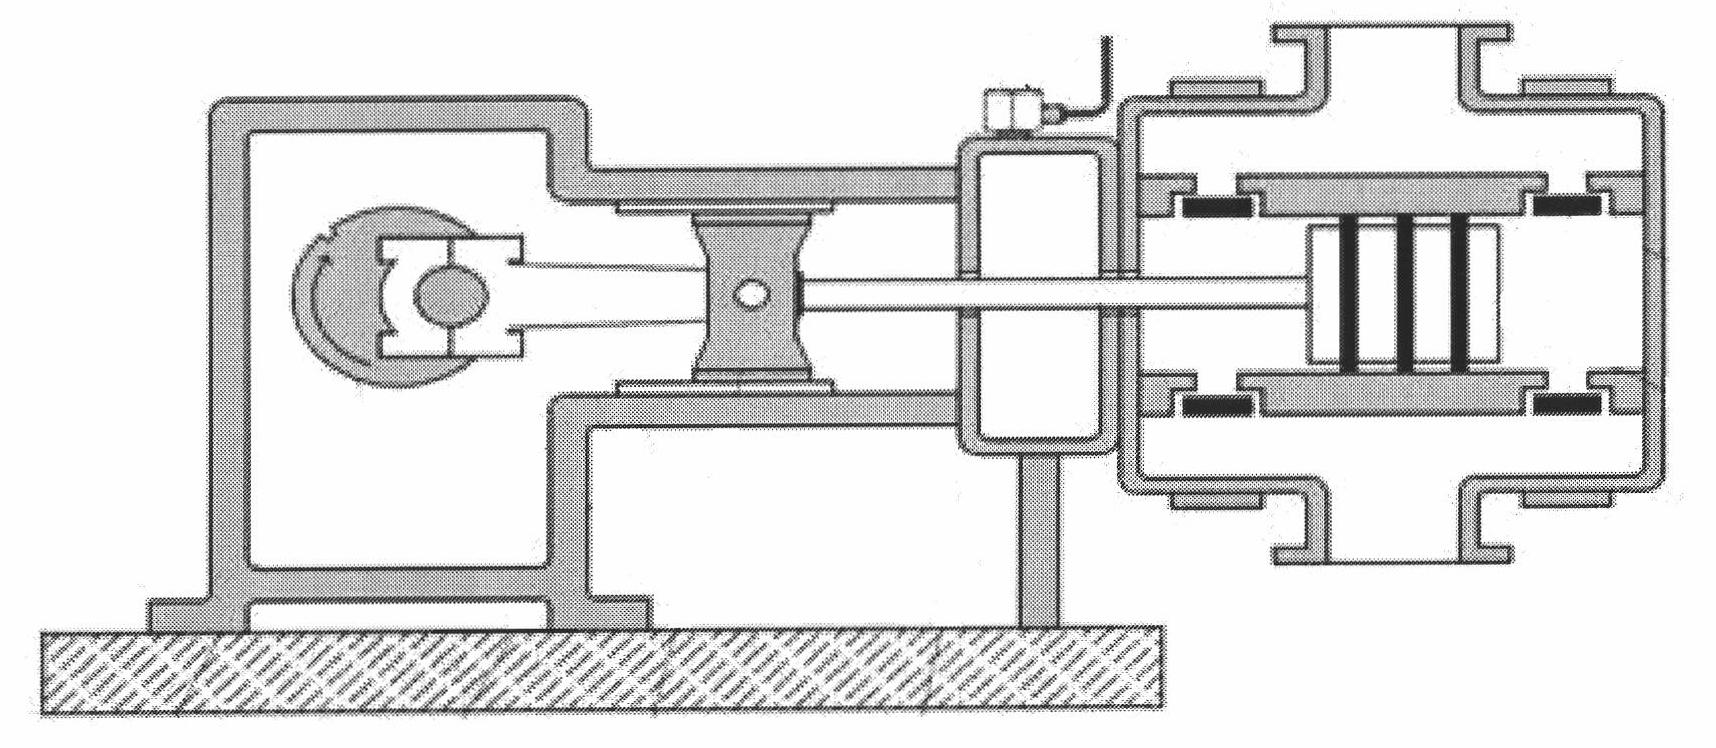 Method for testing vibration of pipeline transportation-oriented compressor